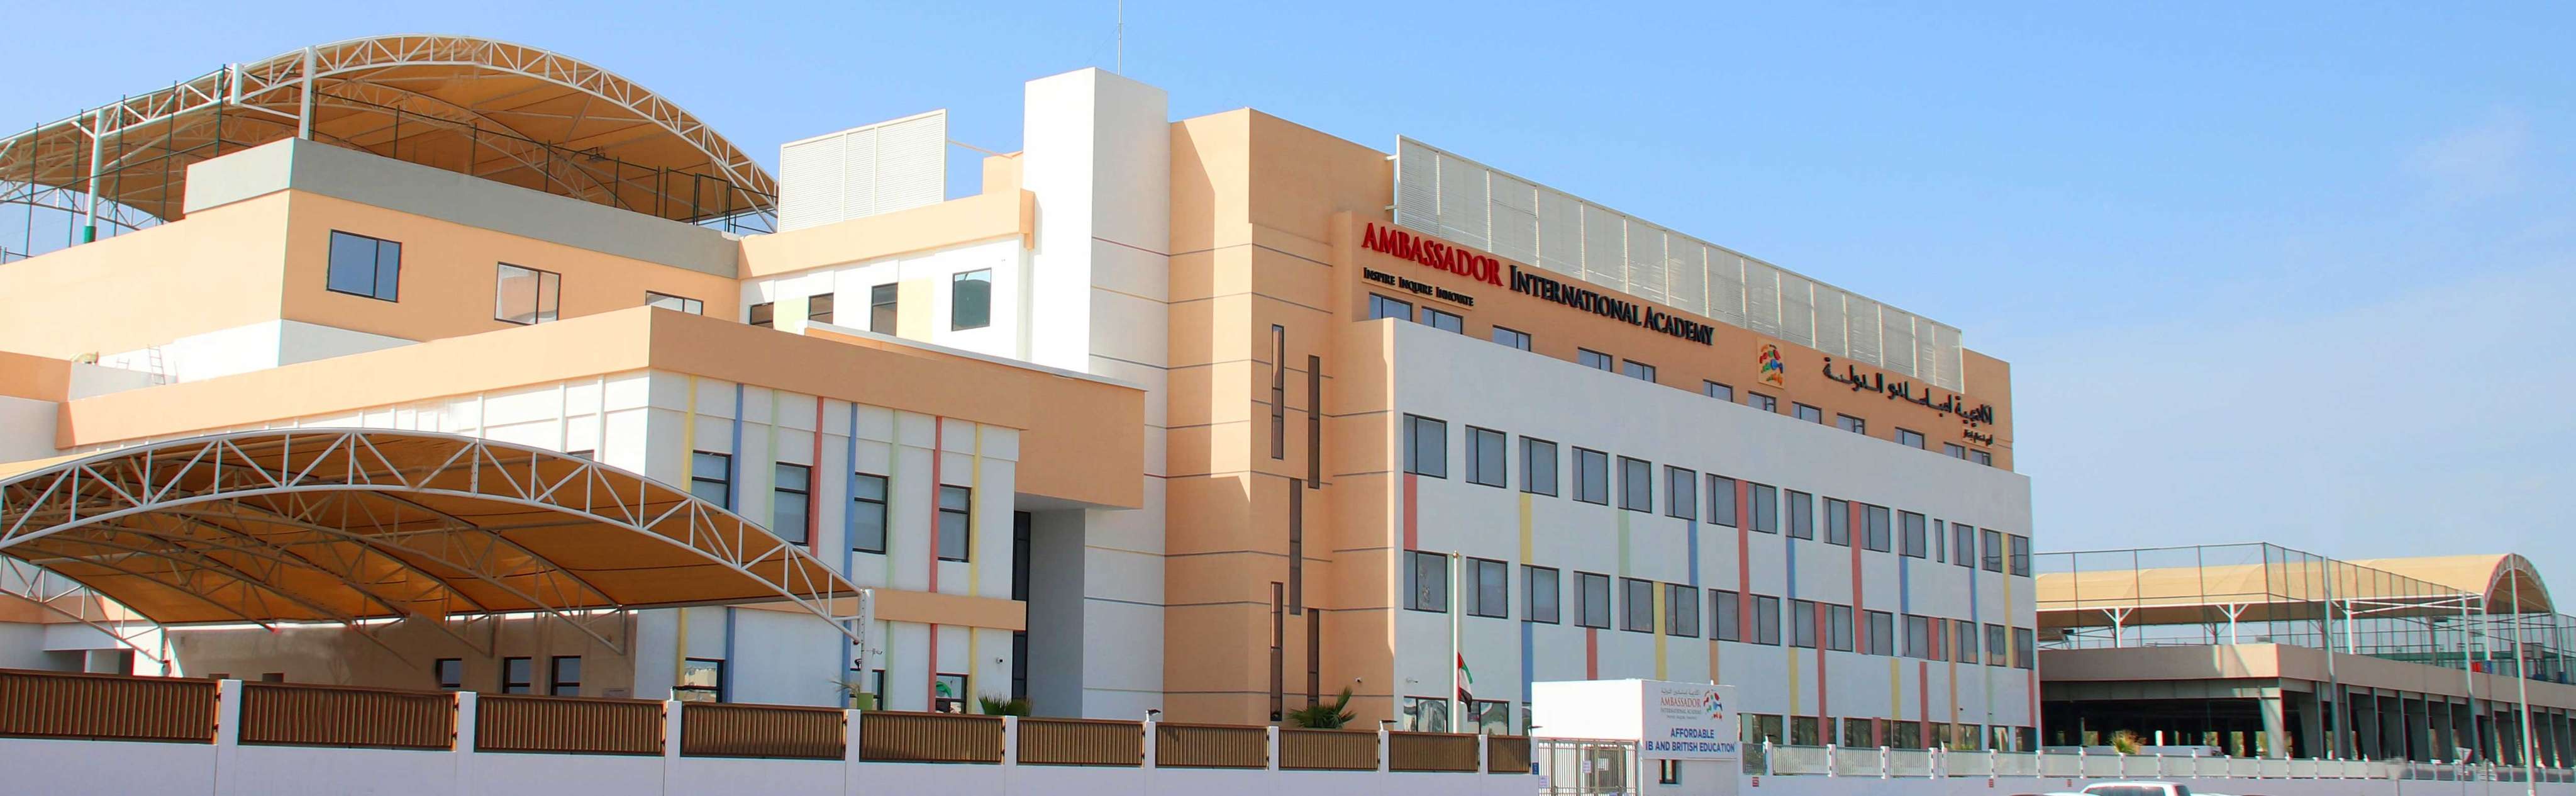 Ambassador International Academy, Dubai